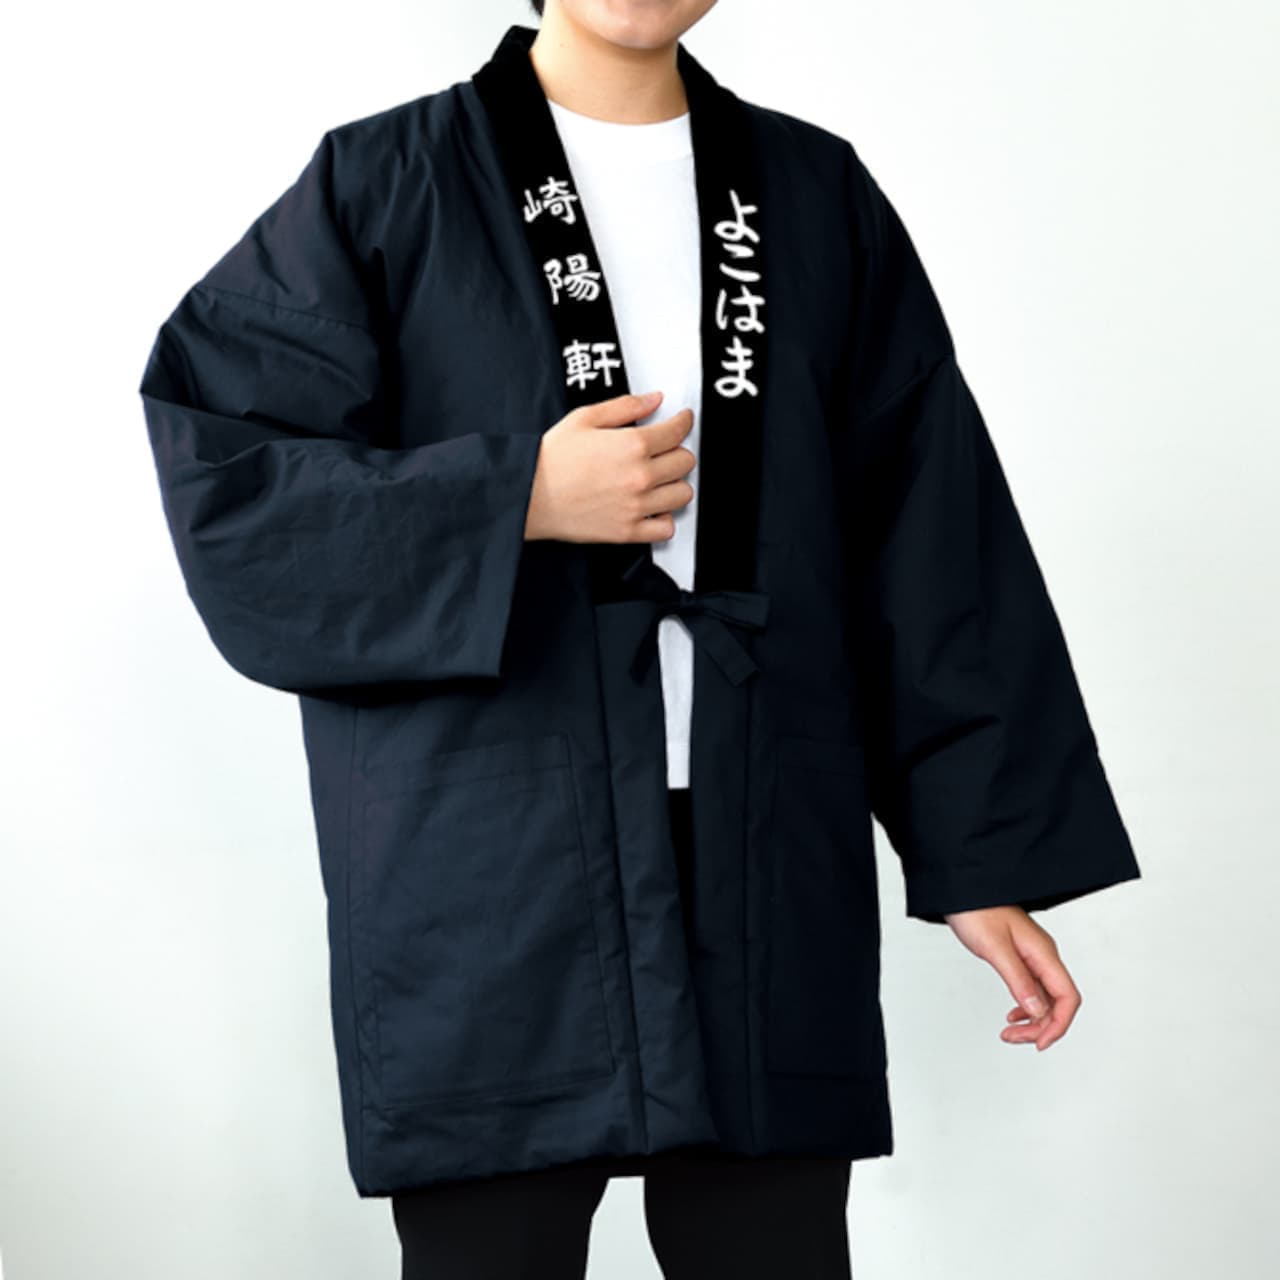 Kiyoken "Old-fashioned Shiumai Blanket" "Fashionable Shiumai Bento Haramaki" "Seller Happy Style Warm Hanten" is back!